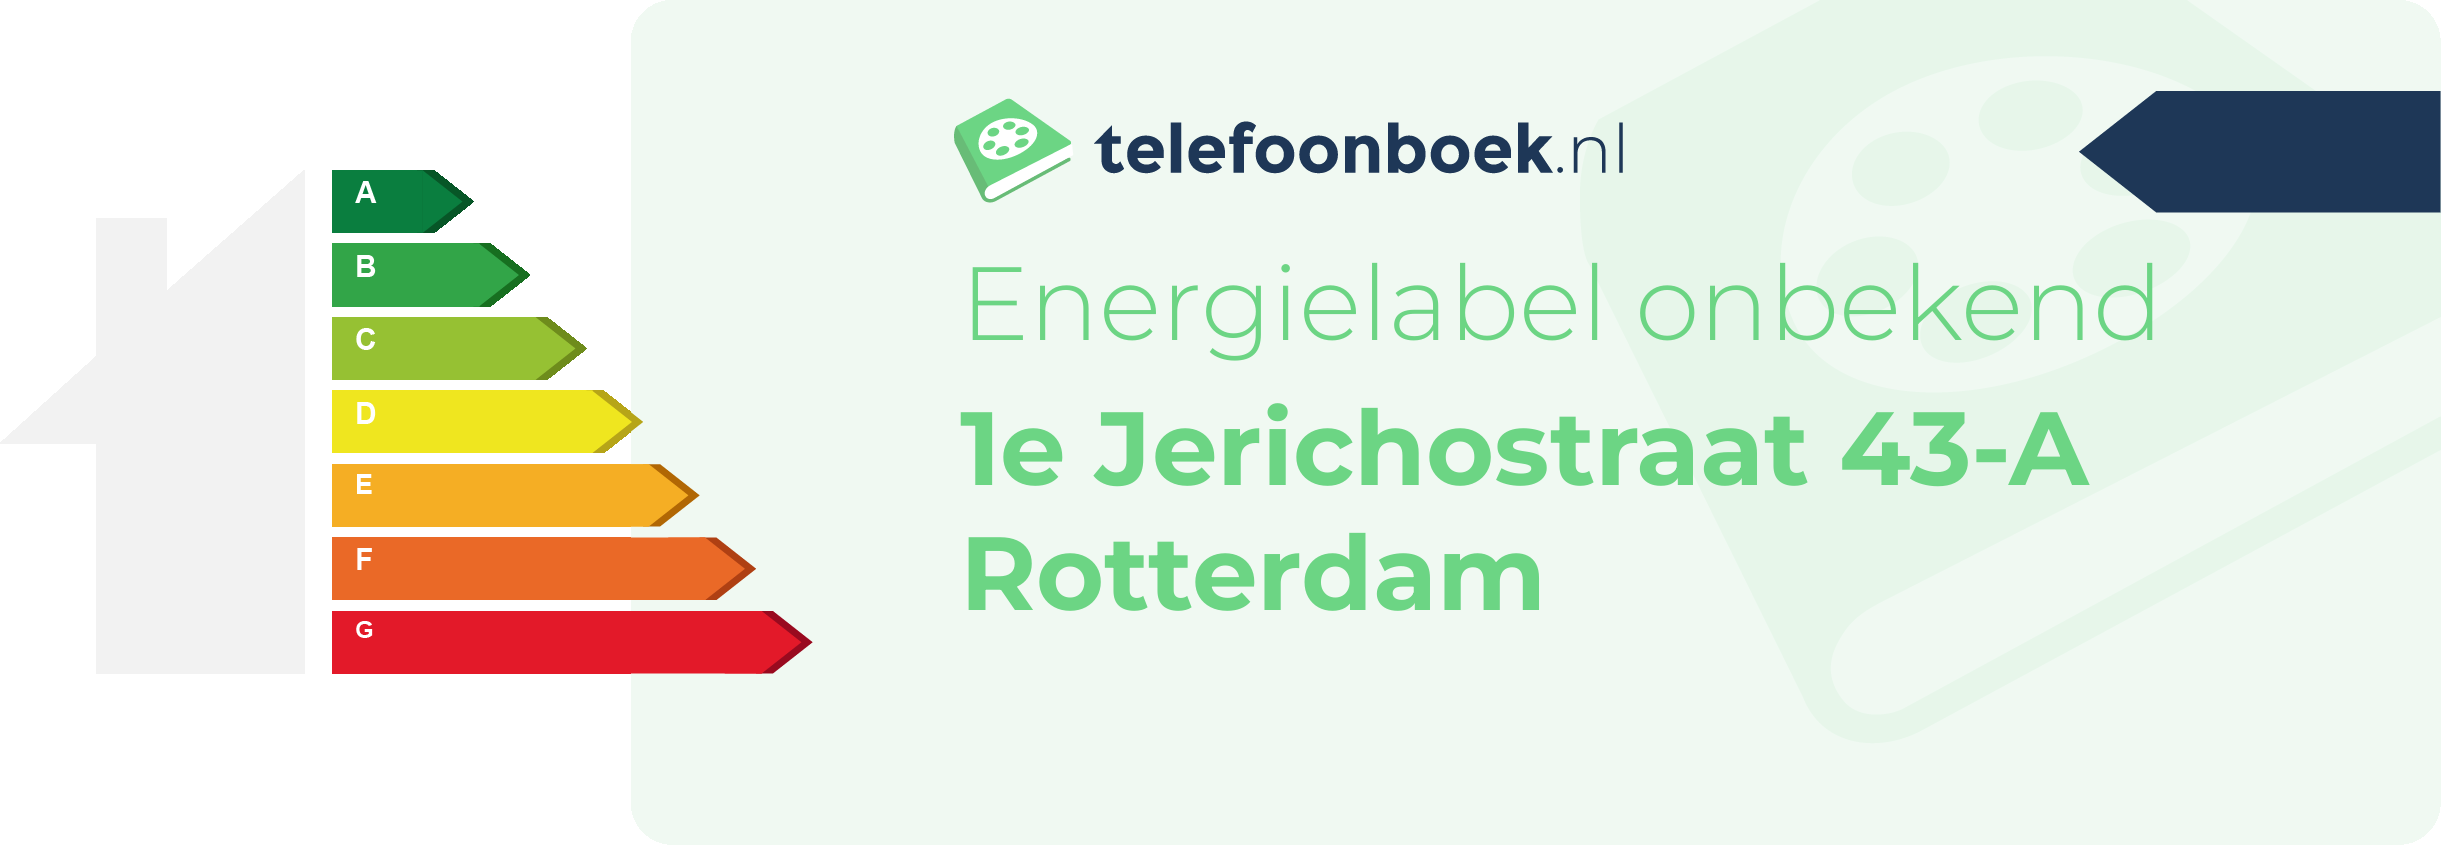 Energielabel 1e Jerichostraat 43-A Rotterdam